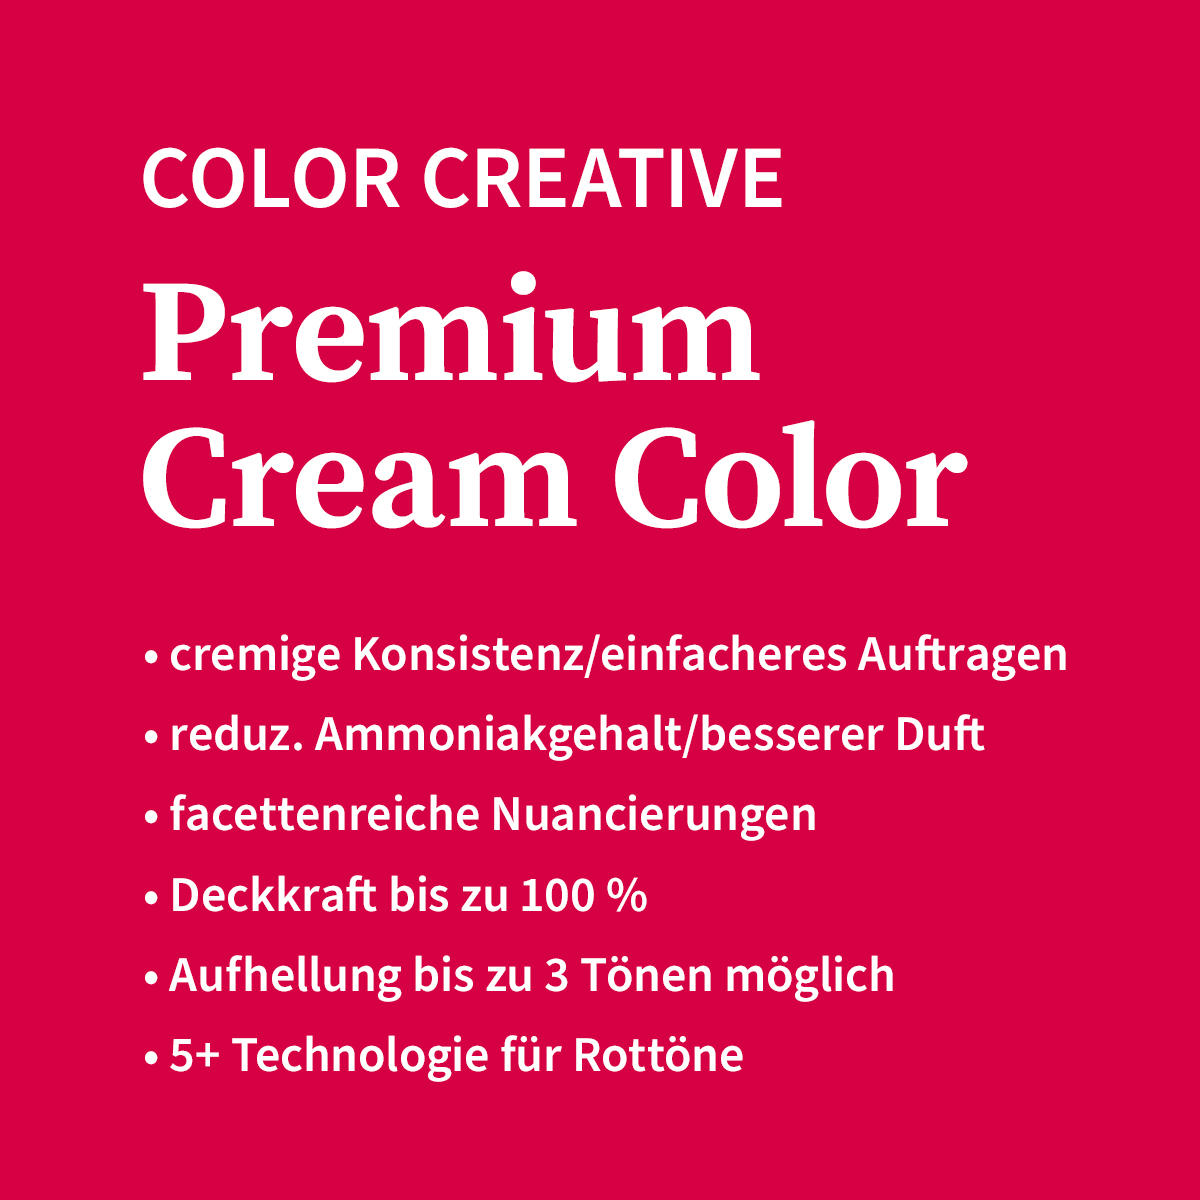 Basler Color Creative Premium Cream Color 6/7 dunkelblond braun, Tube 60 ml - 4